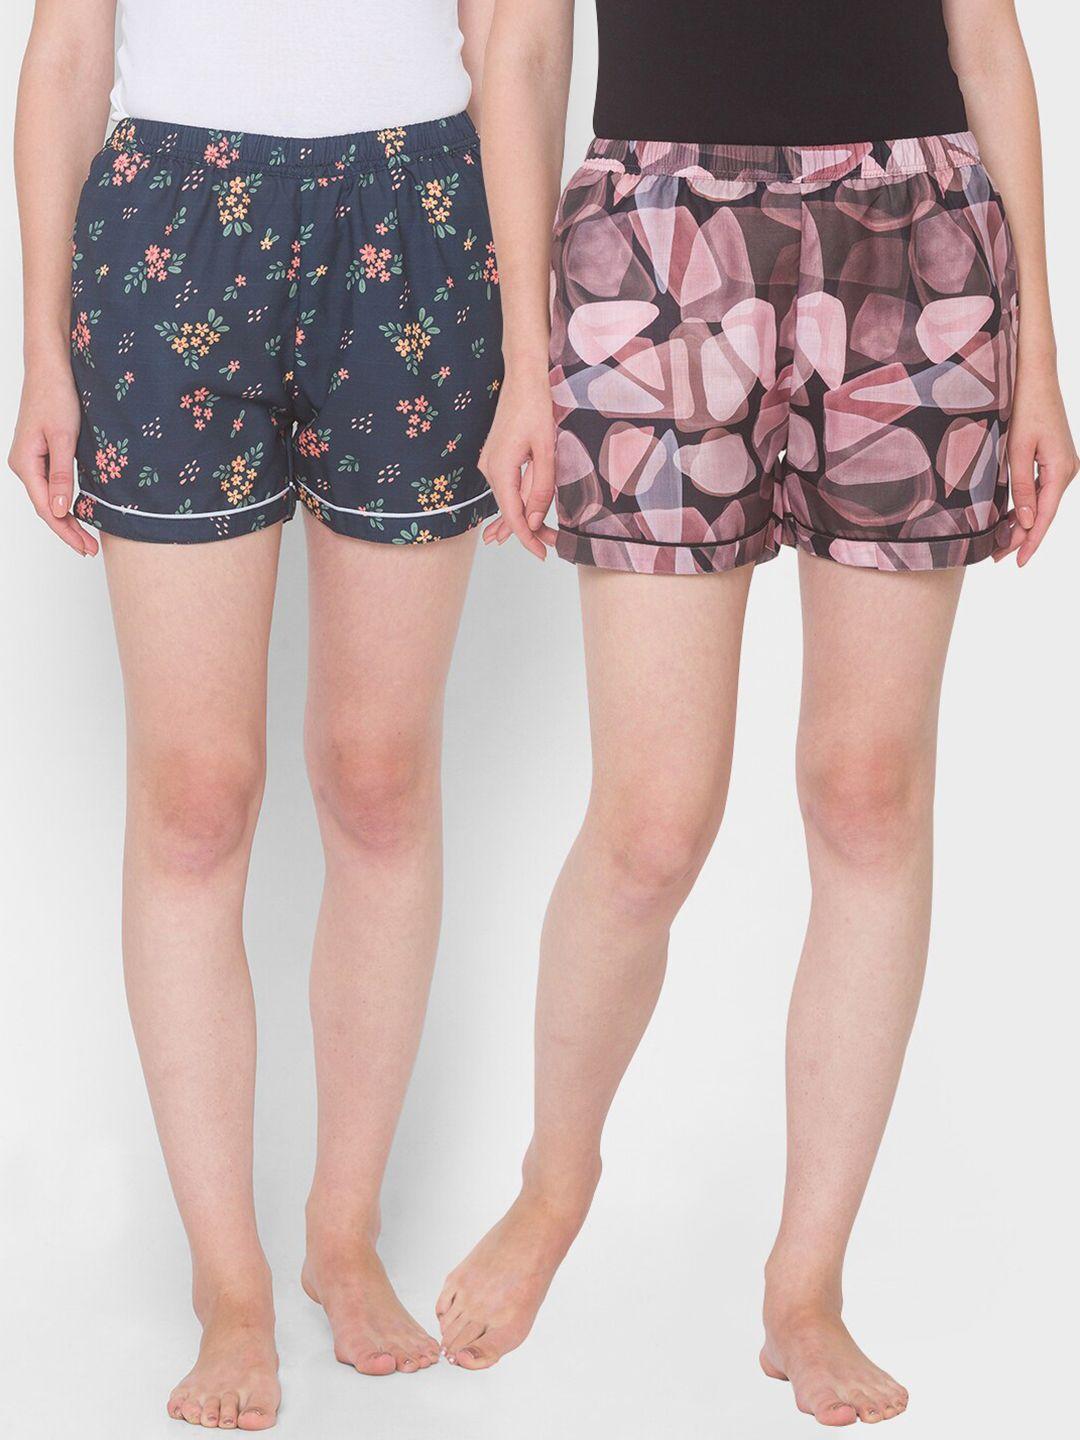 fashionrack women set of 2 printed lounge shorts